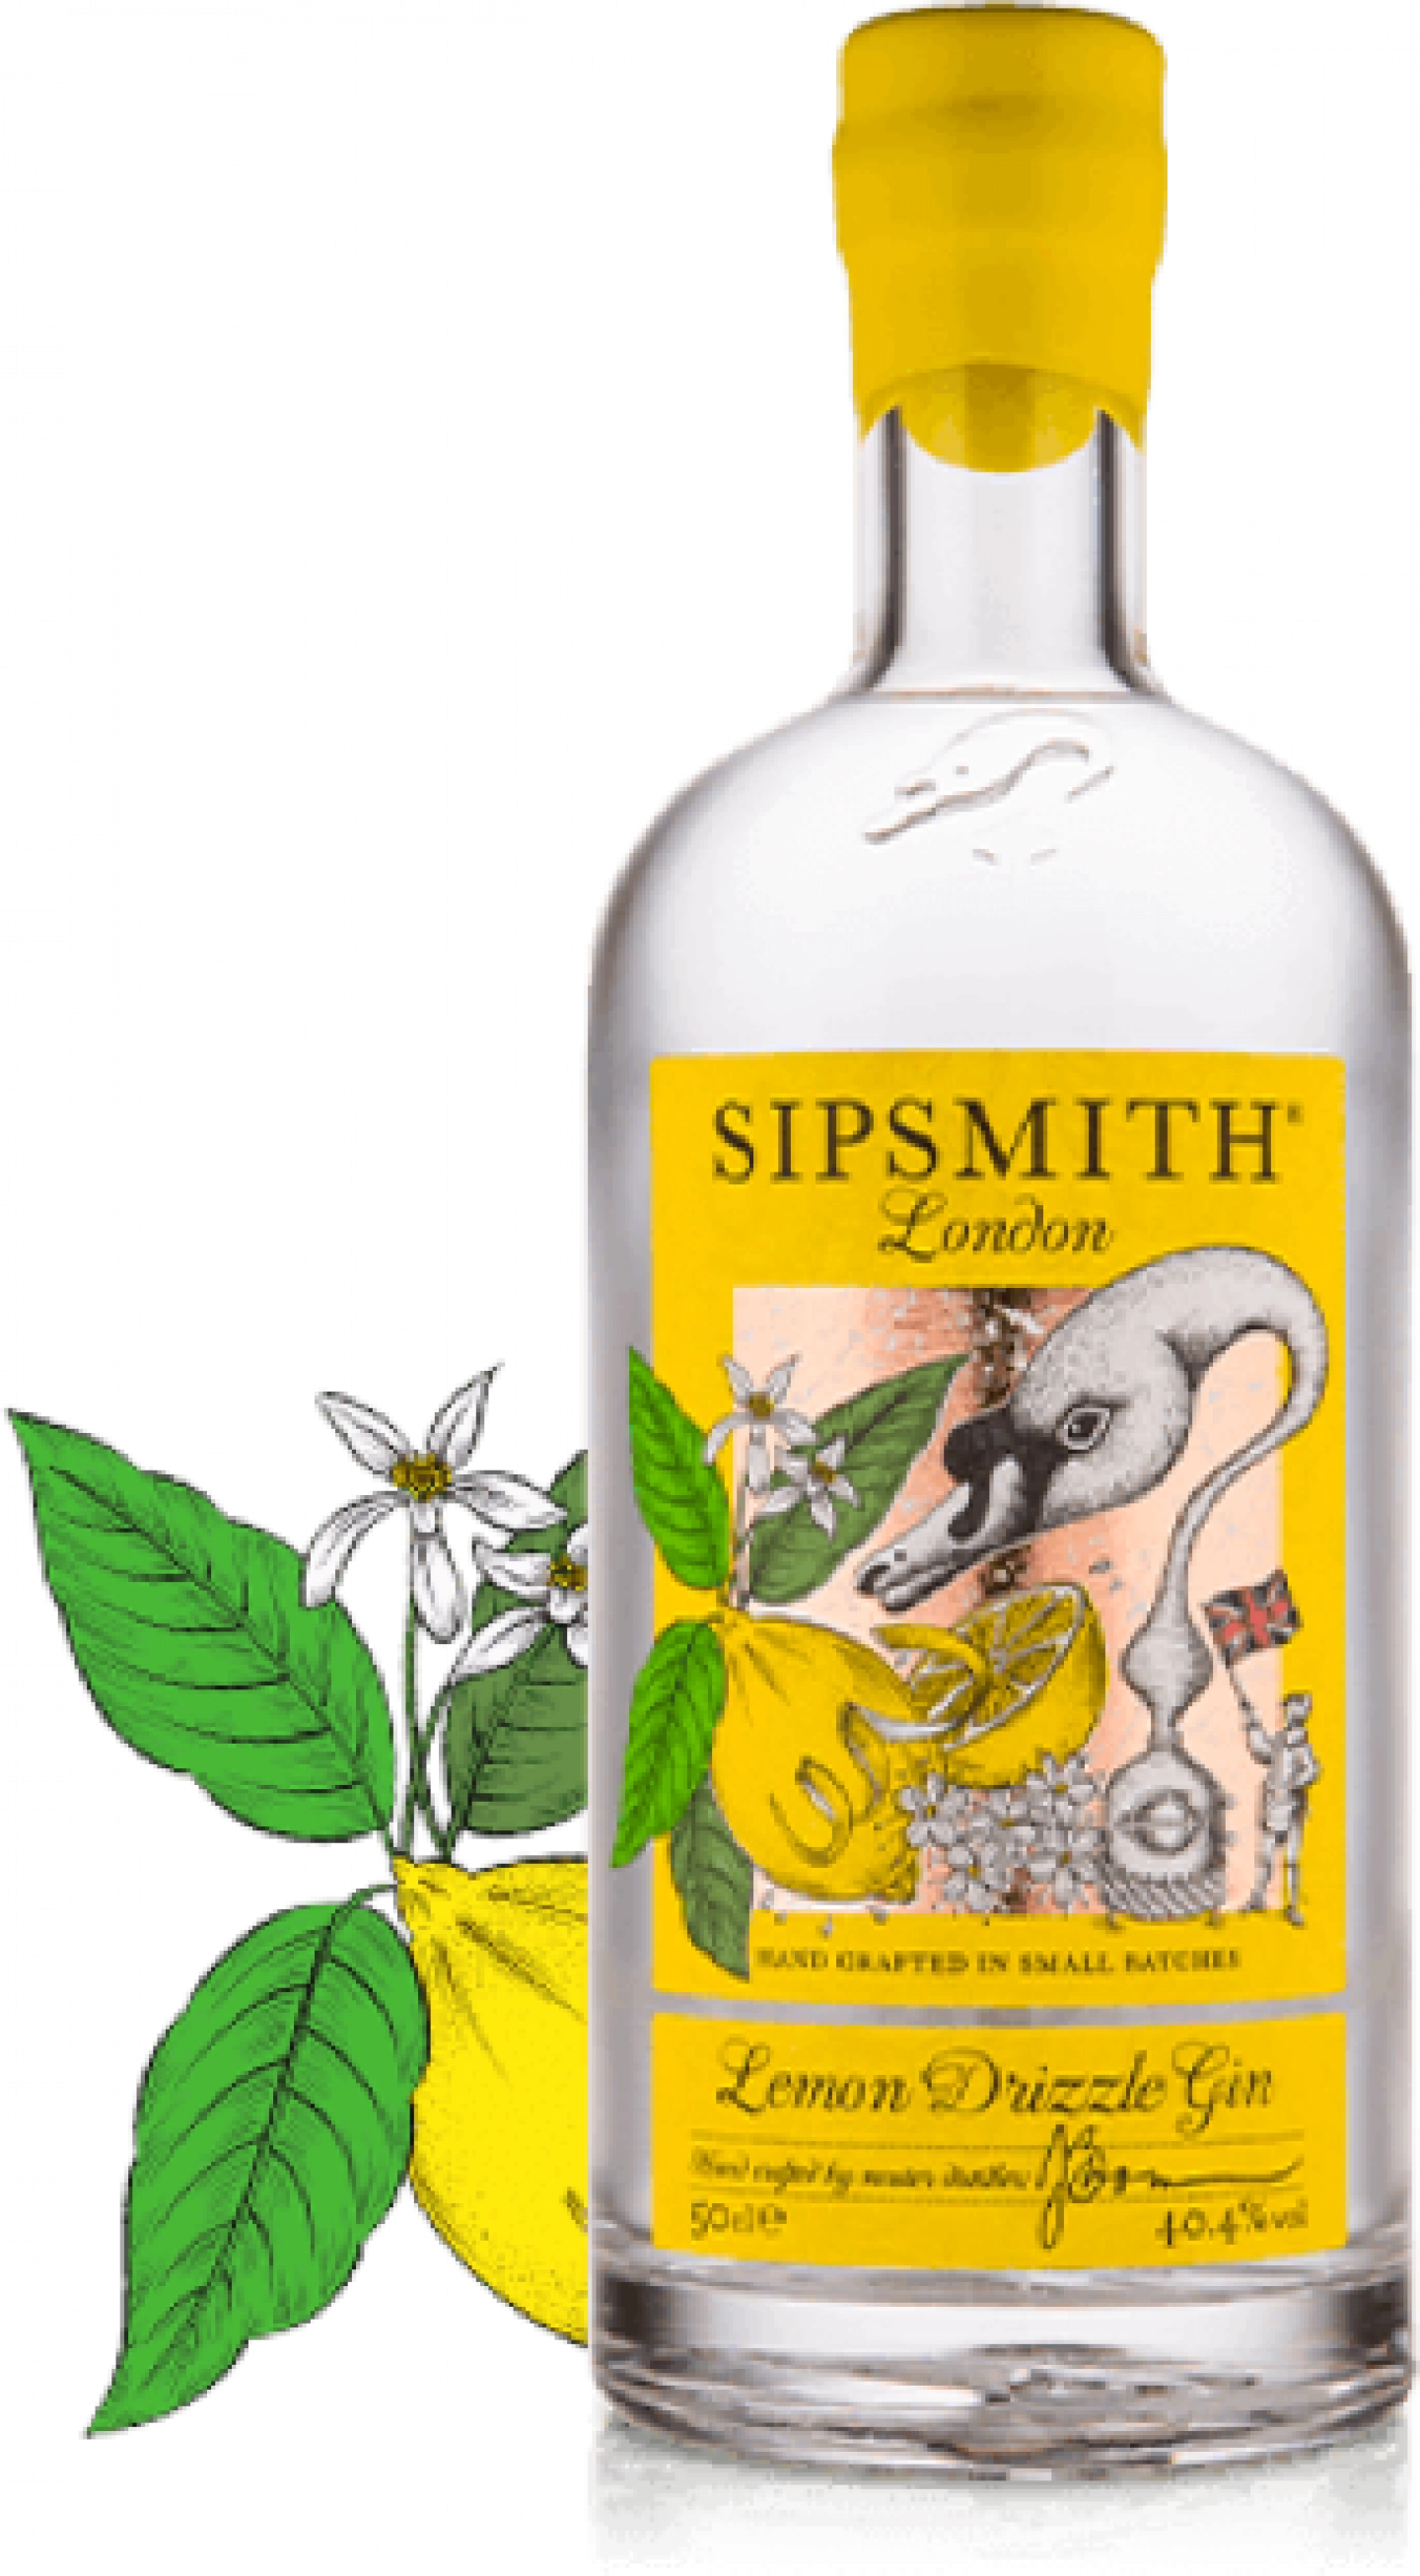 Sipsmith bottle